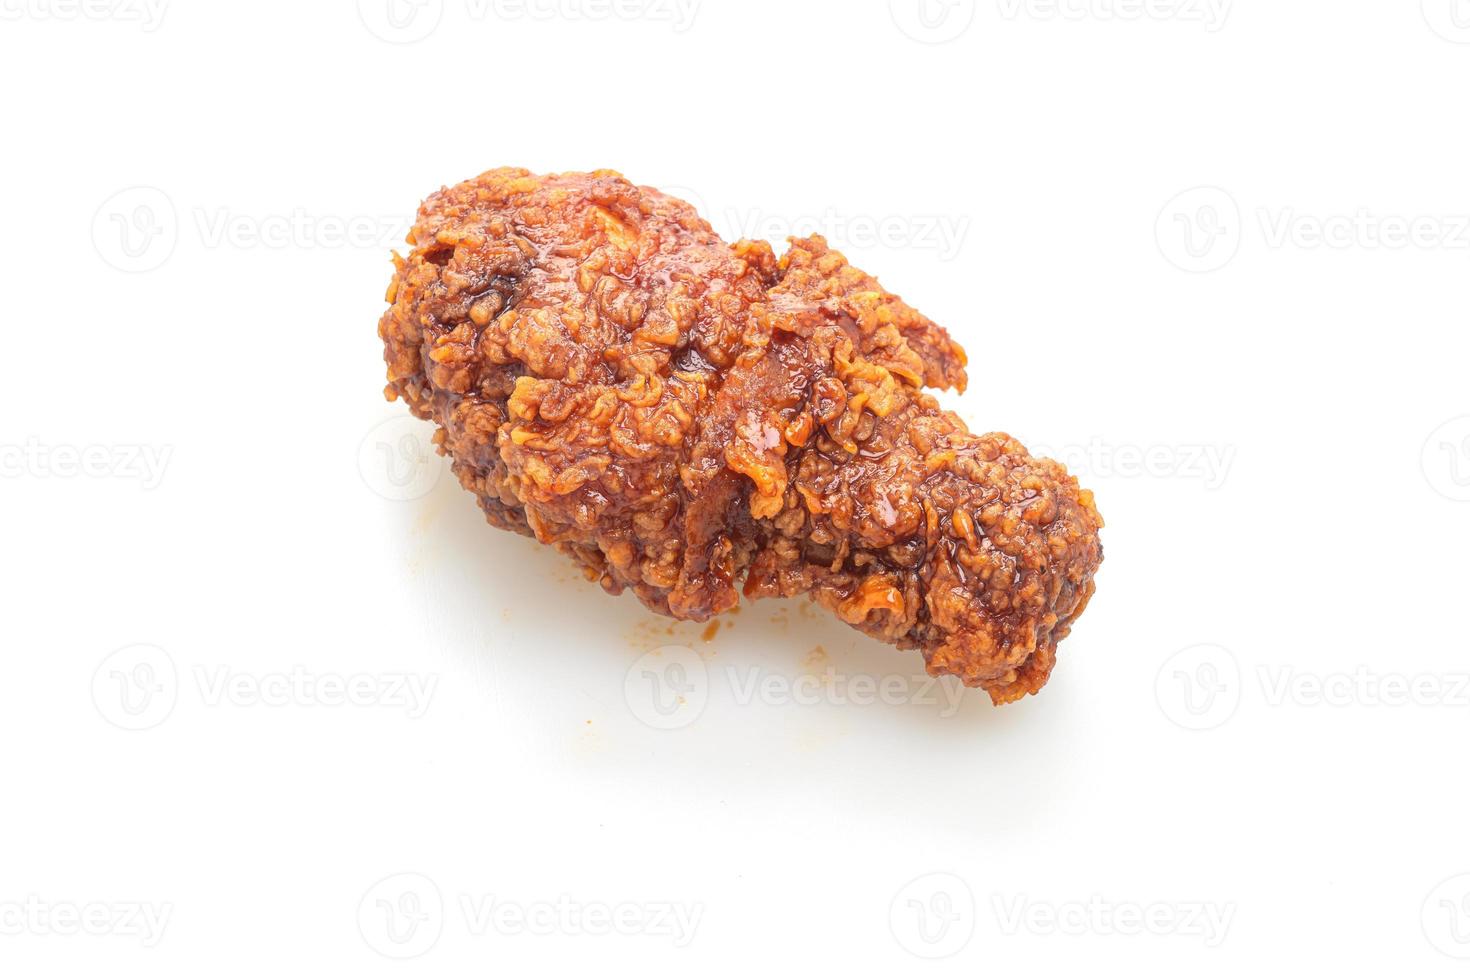 stekt kyckling med kryddig koreansk sås på vit bakgrund foto